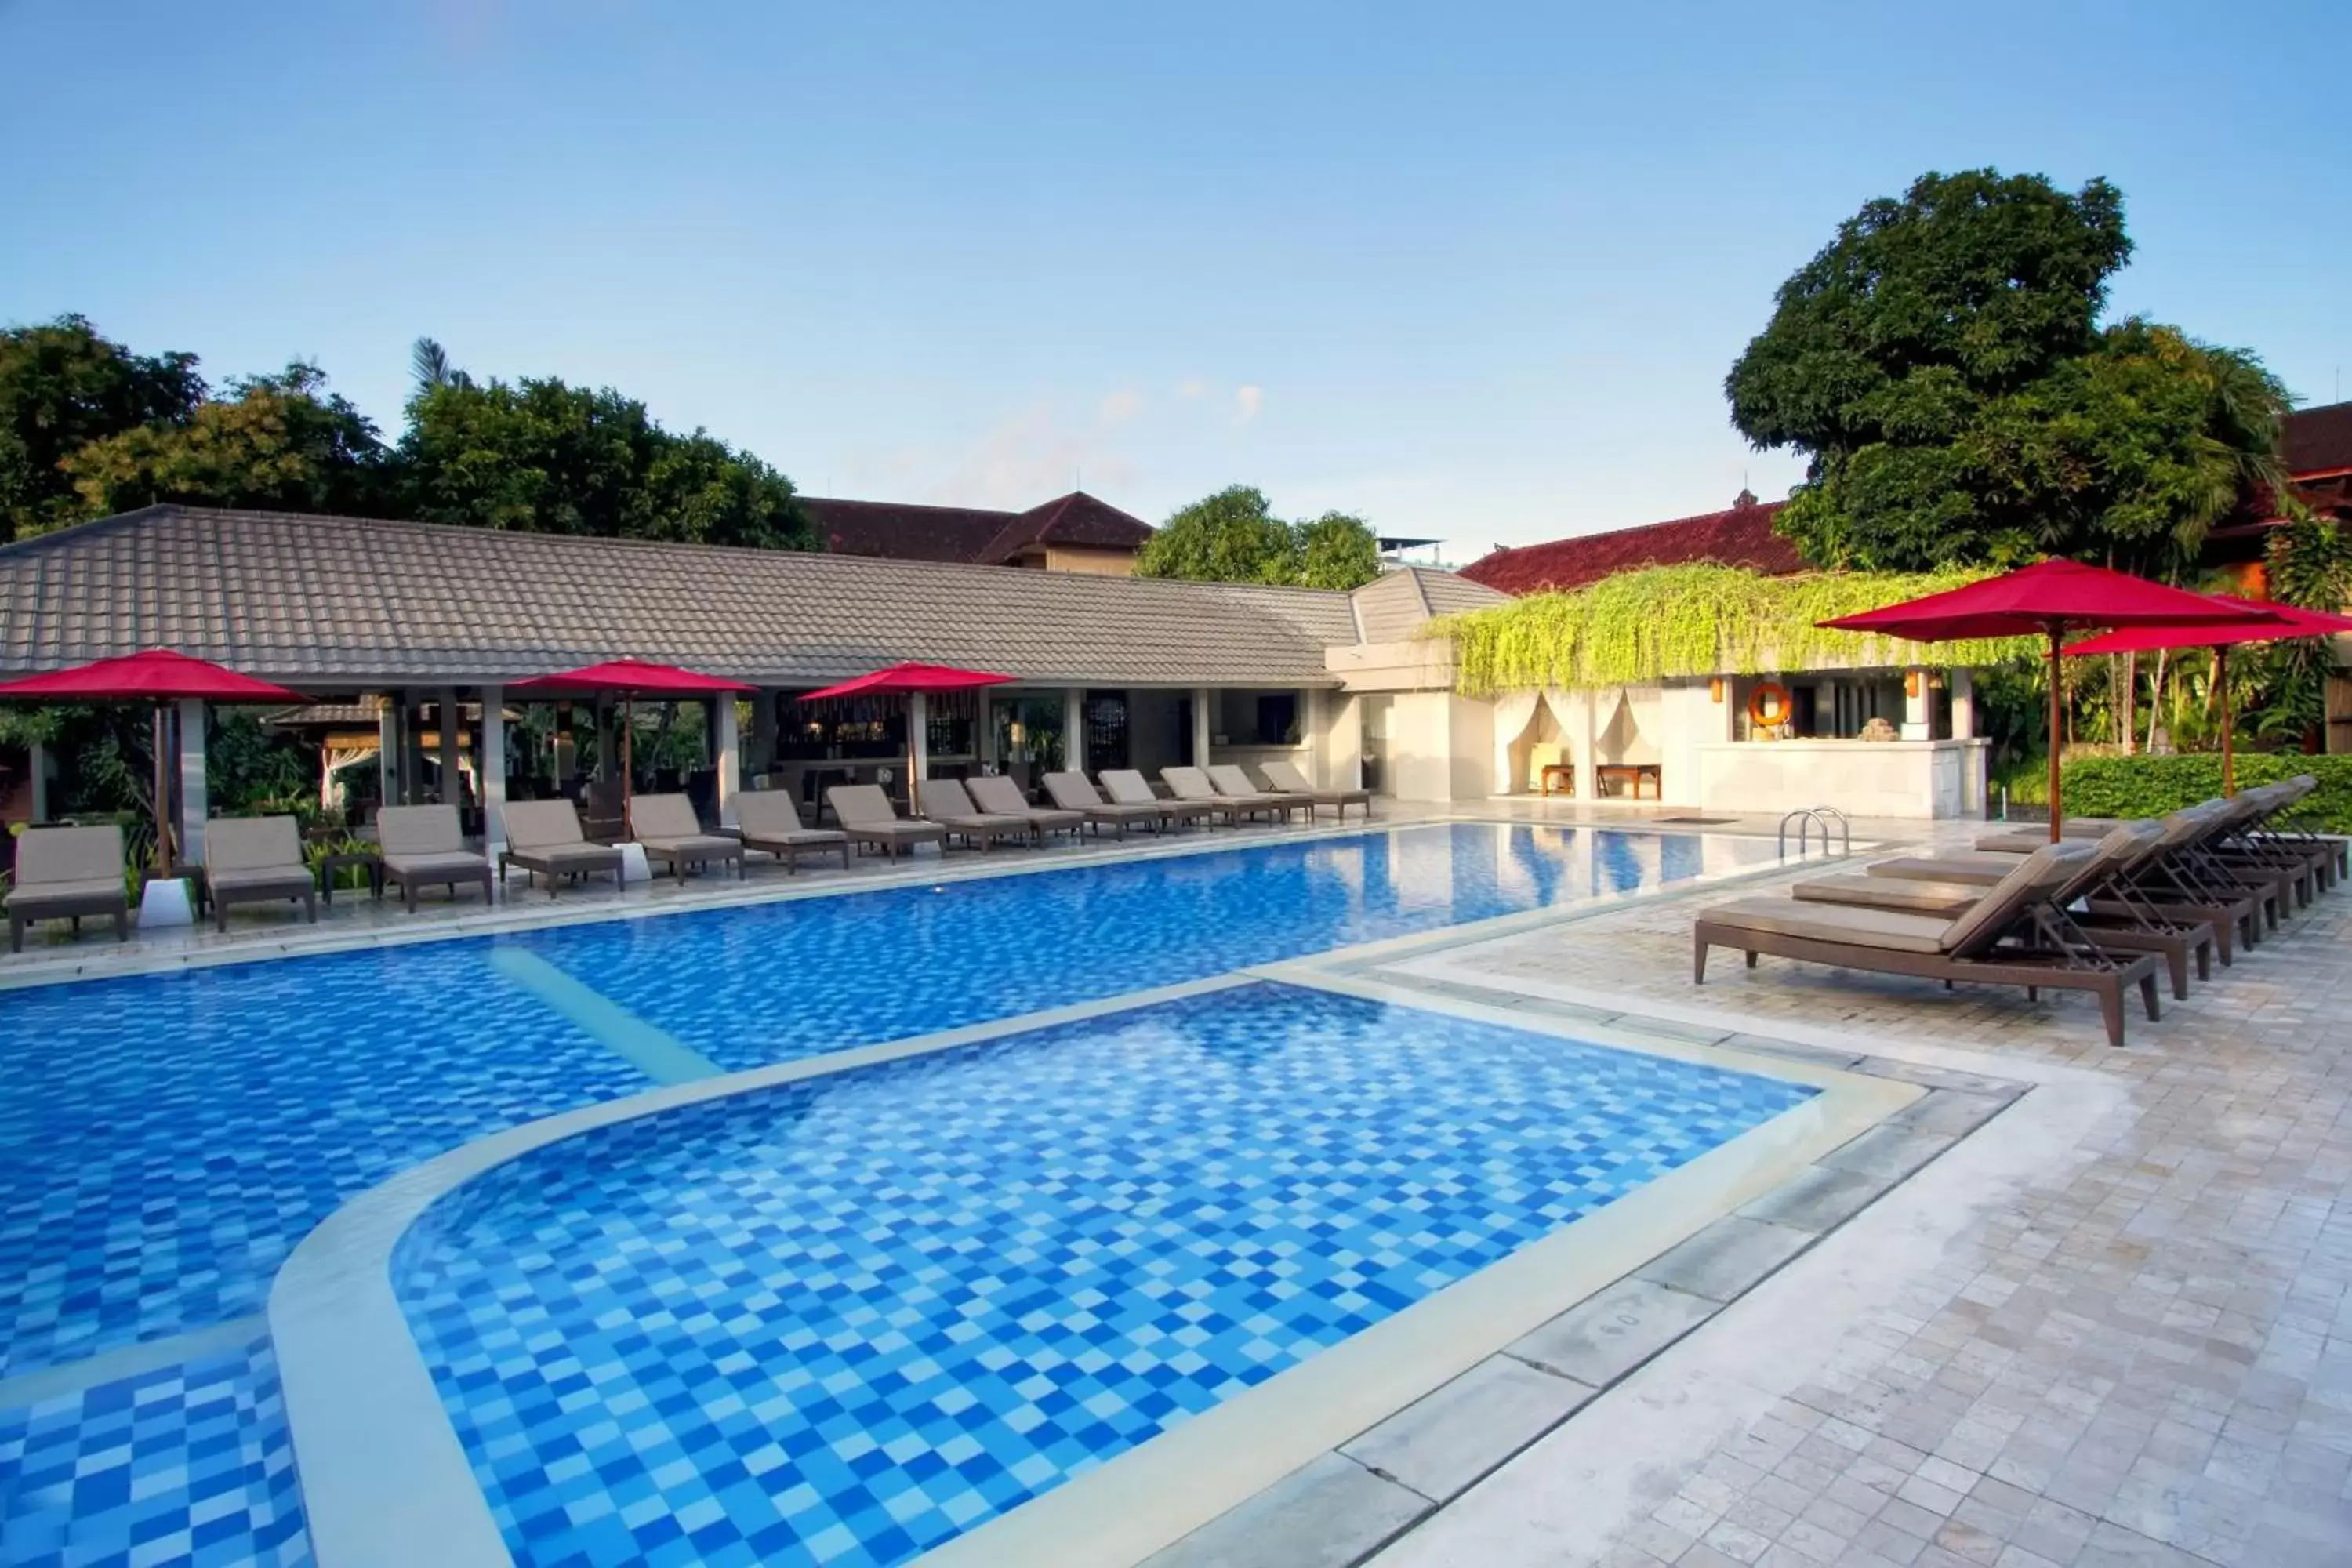 Swimming pool in Dewi Sri Hotel